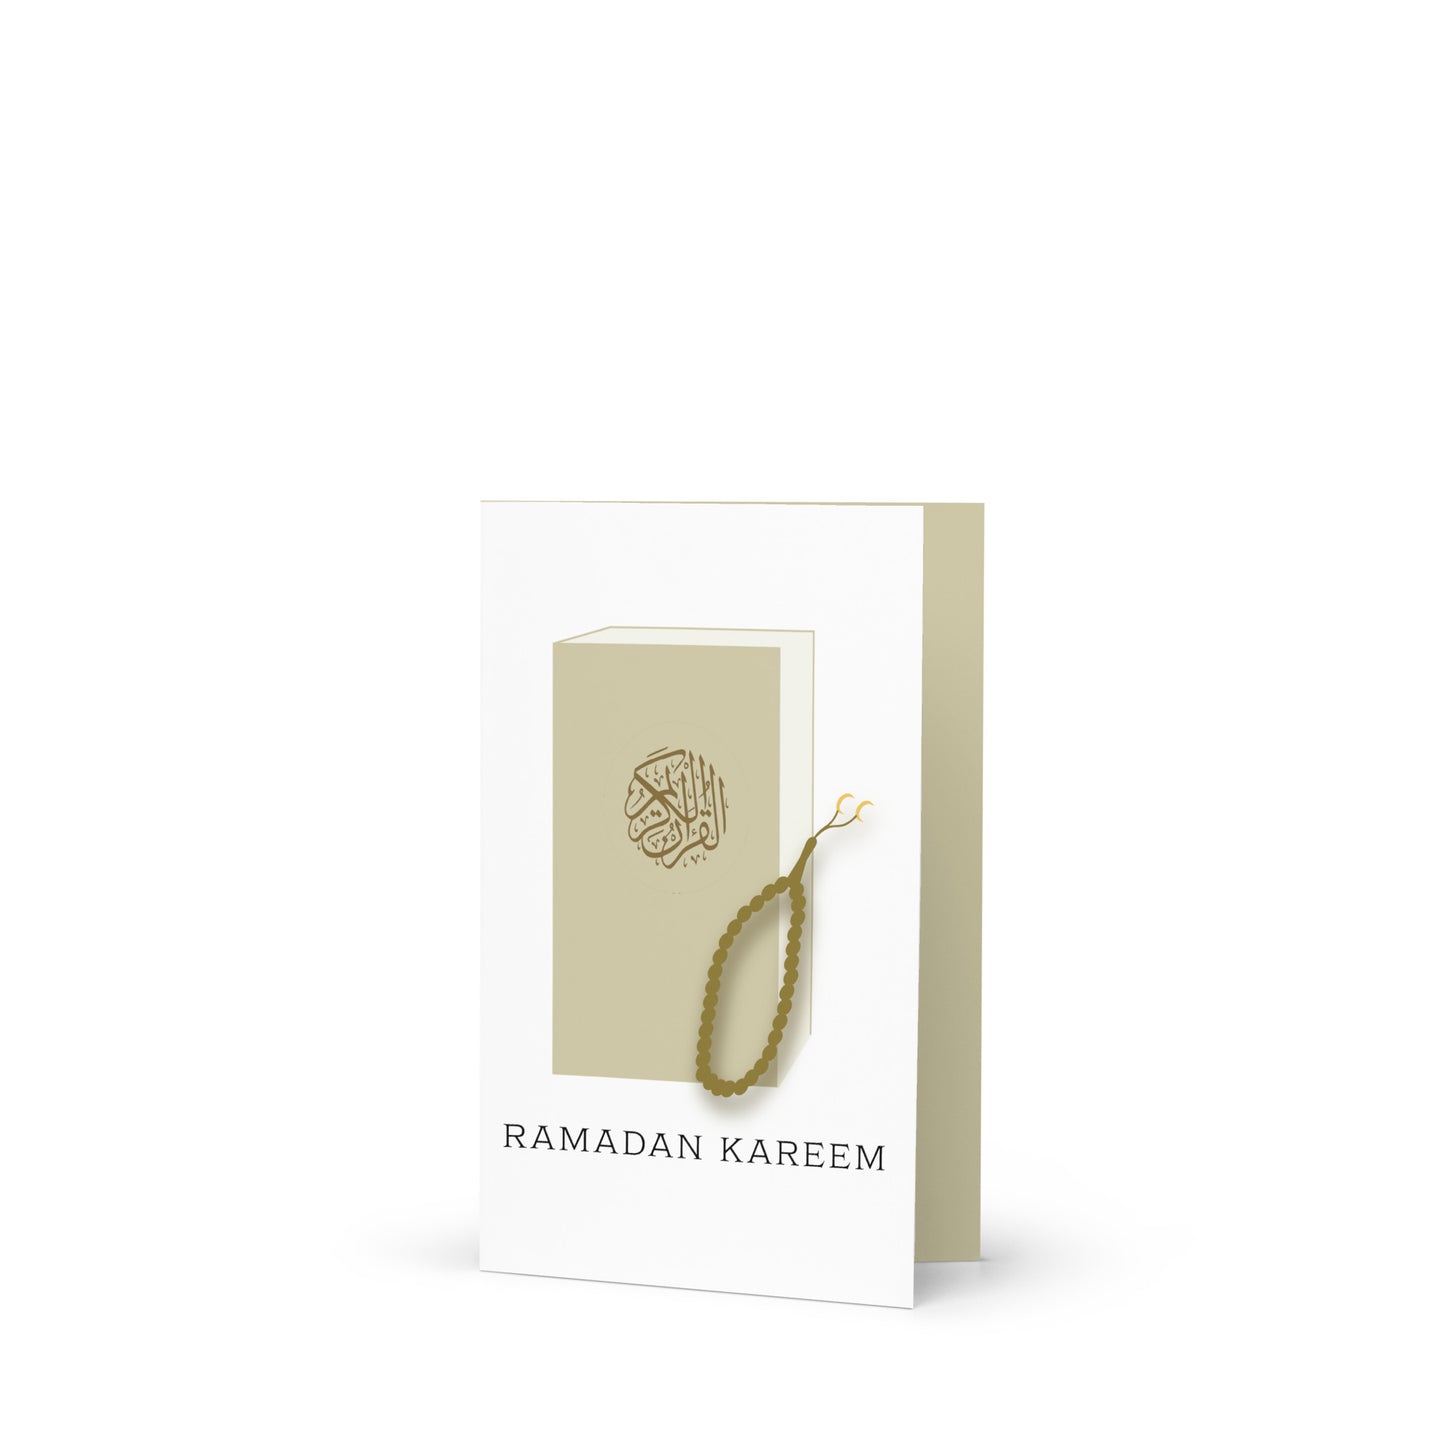 Ramadan Kareem - Greeting card